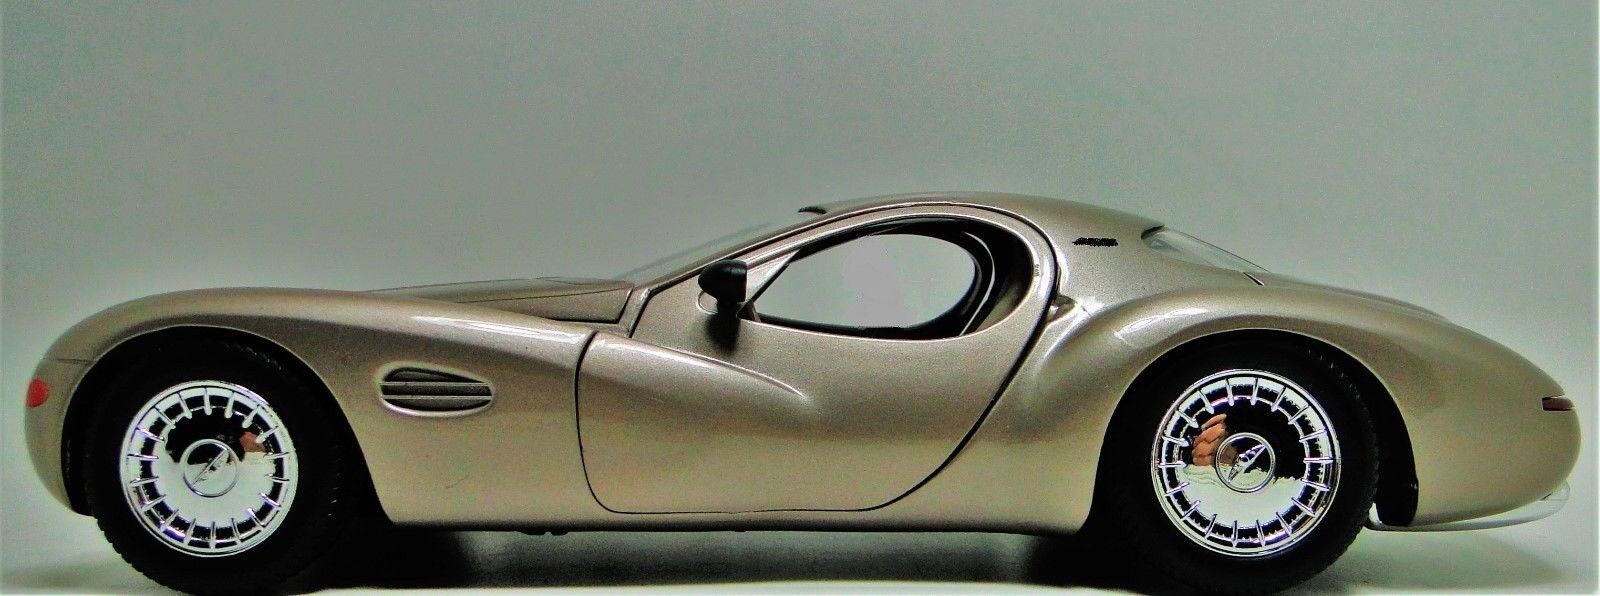 Sports Car Classic Custom Dream Built Metal Body Concept Model Hot Rod Race  GT